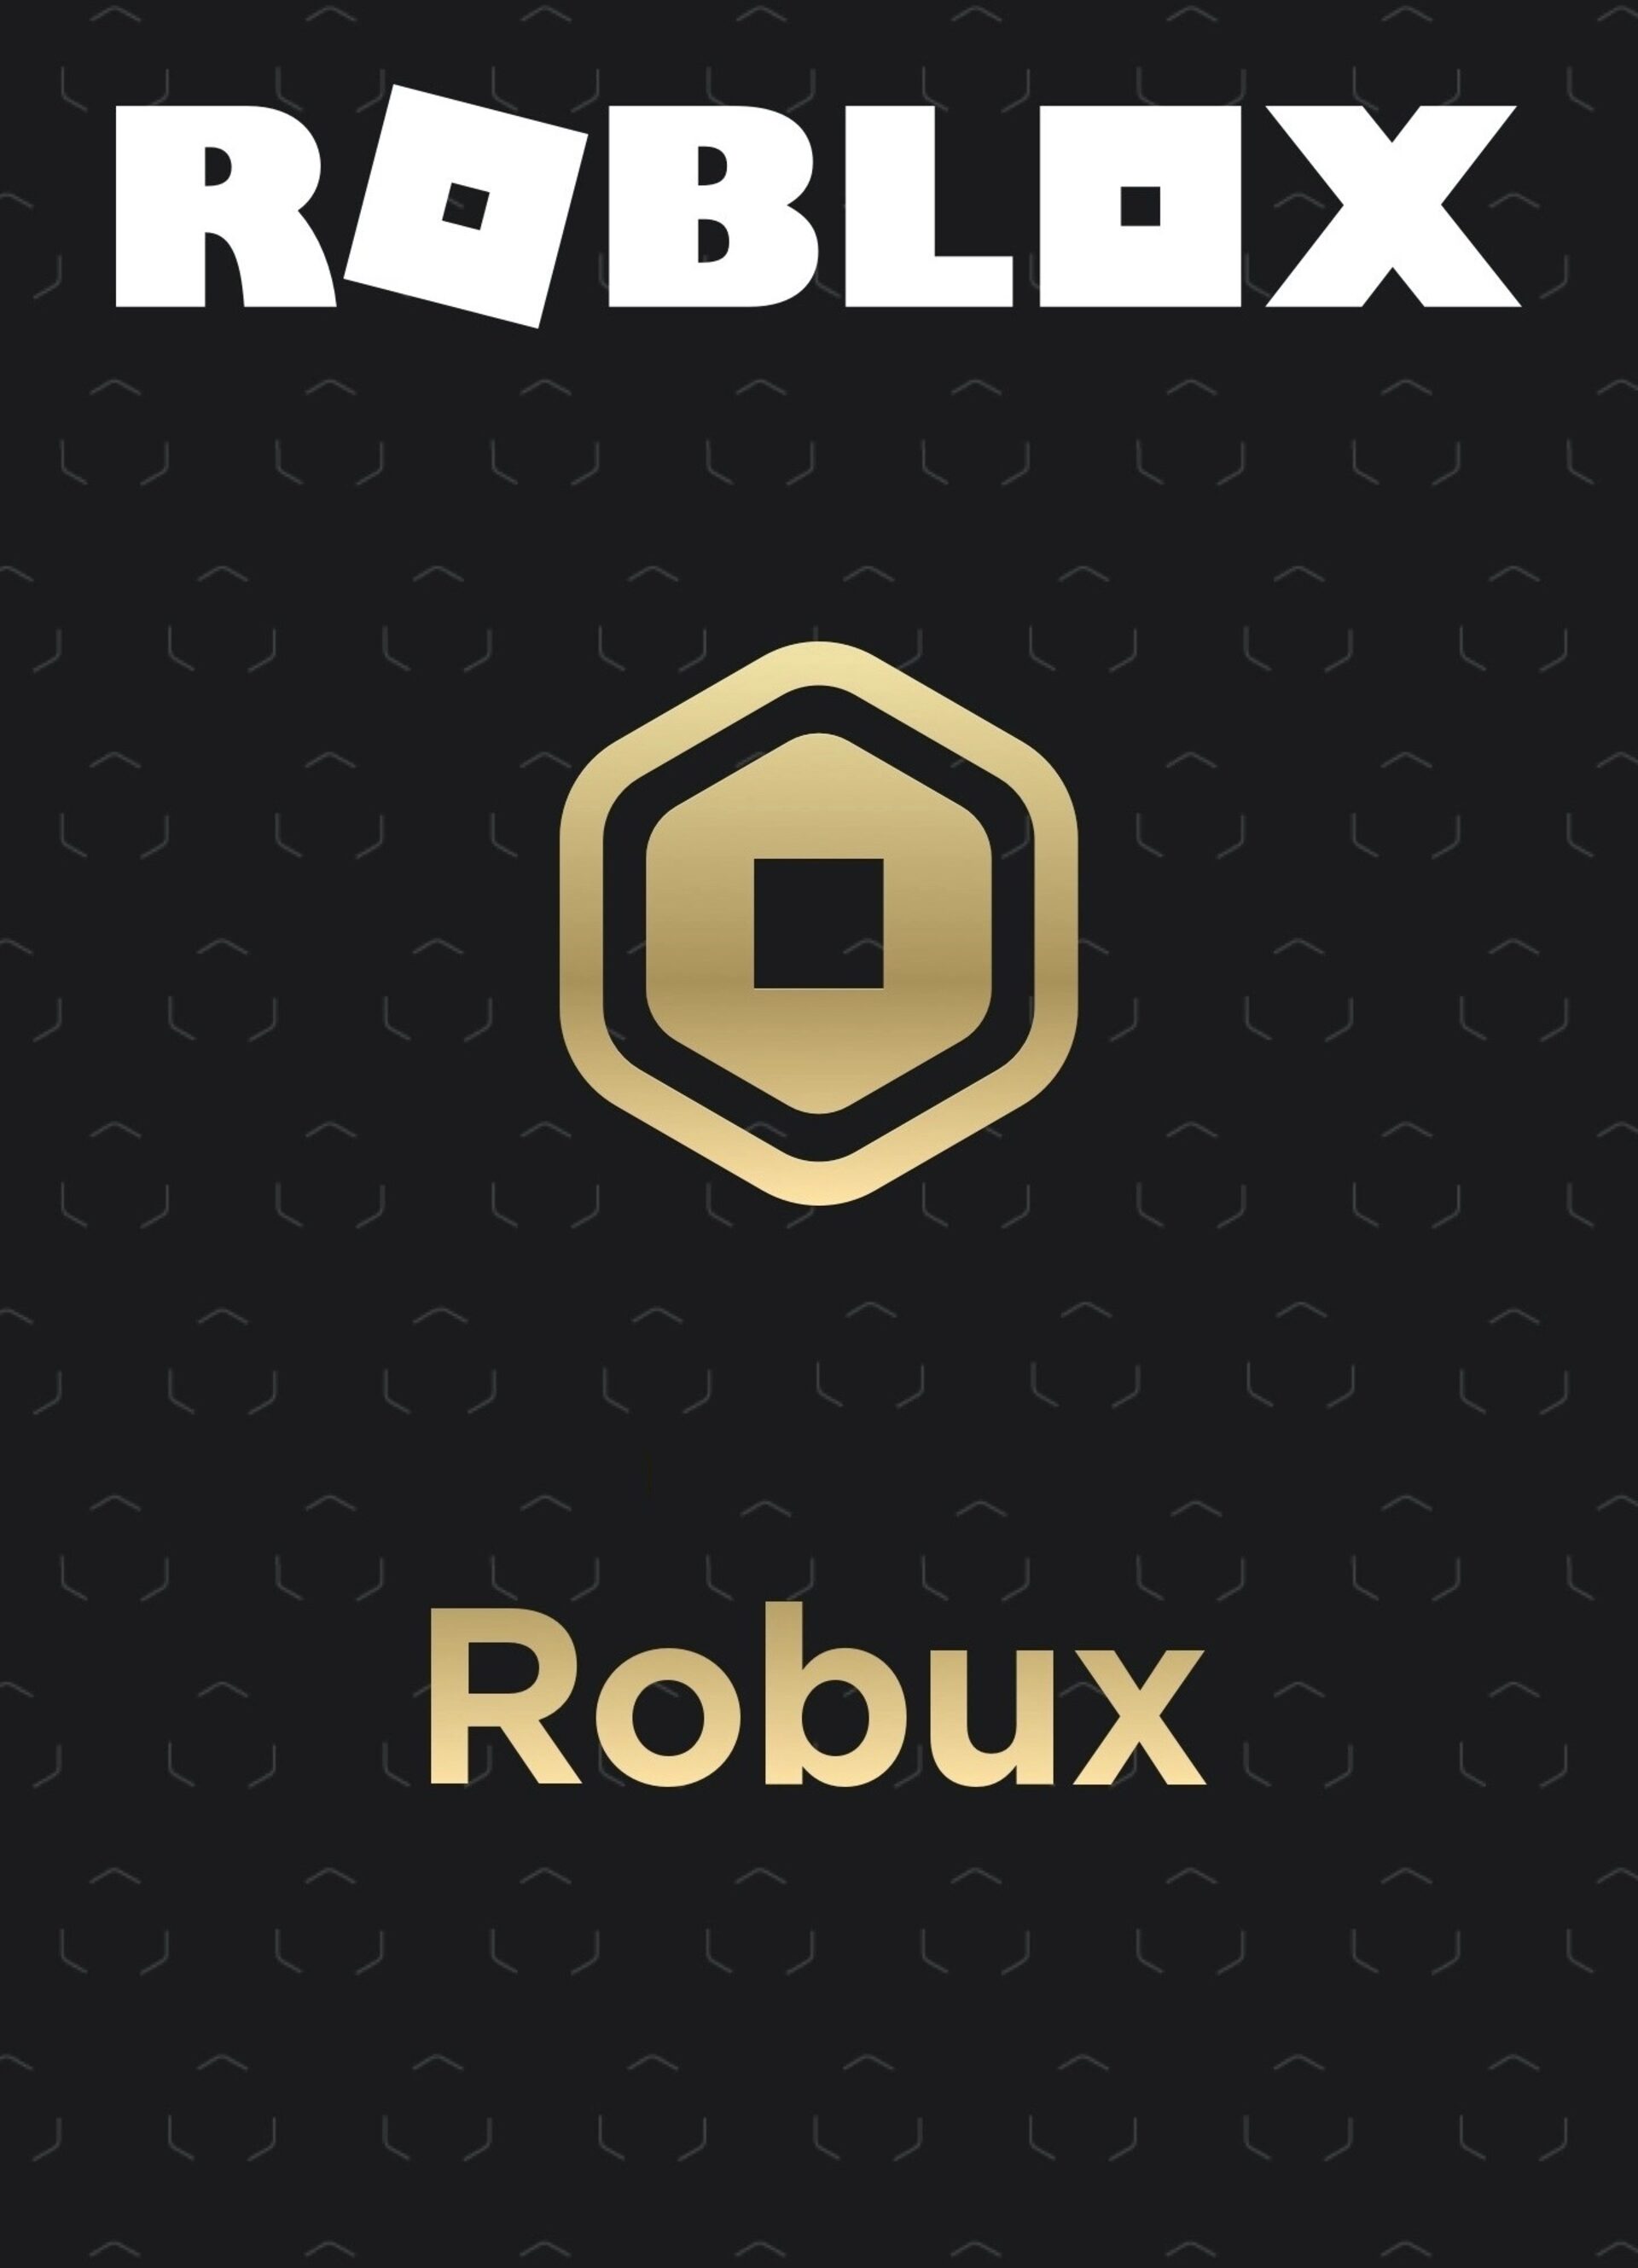 400 Roblox robux  Roblox, Tutorial, Gift card